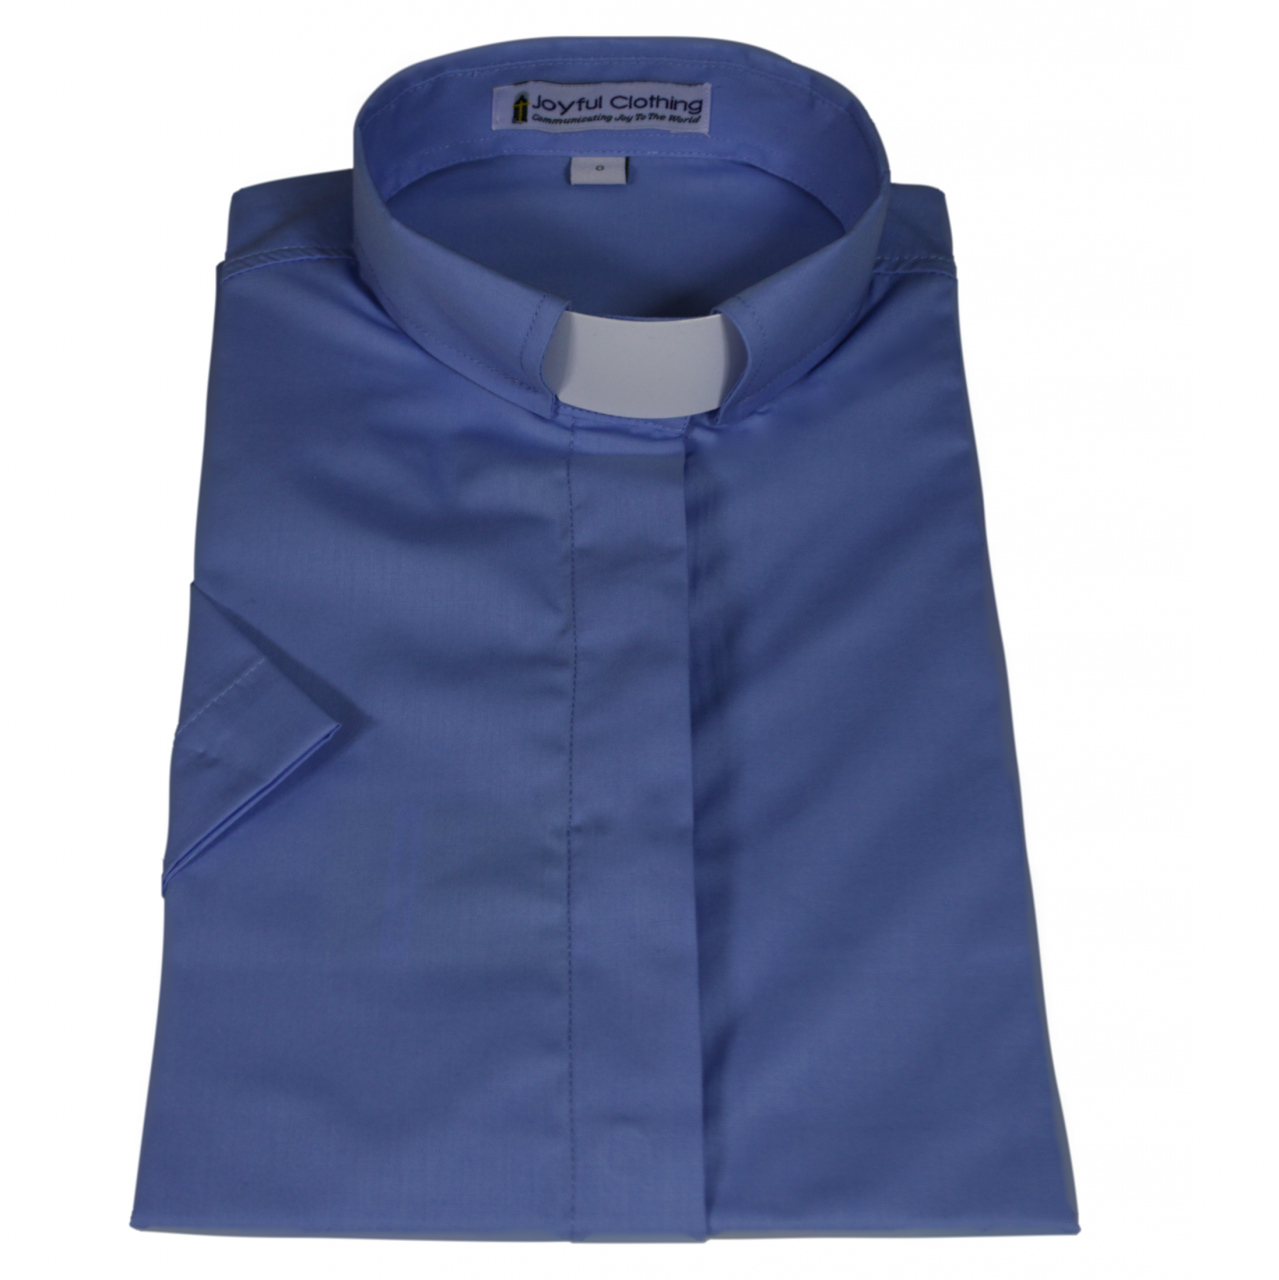 563. Women's Short-Sleeve Tab-Collar Clergy Shirt - Light Blue